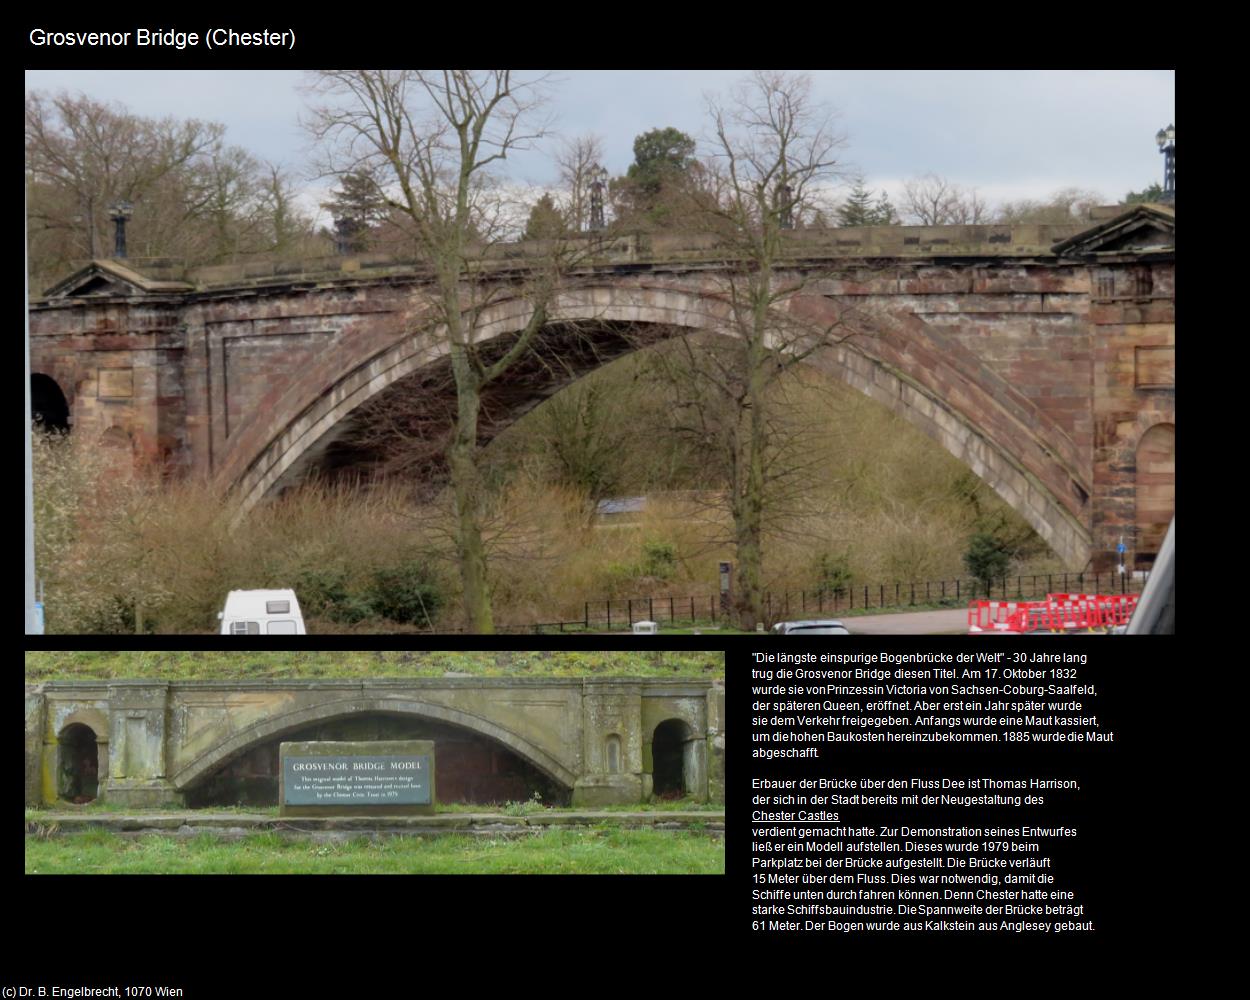 Grosvenor Bridge  (Chester, England) in Kulturatlas-ENGLAND und WALES(c)B.Engelbrecht